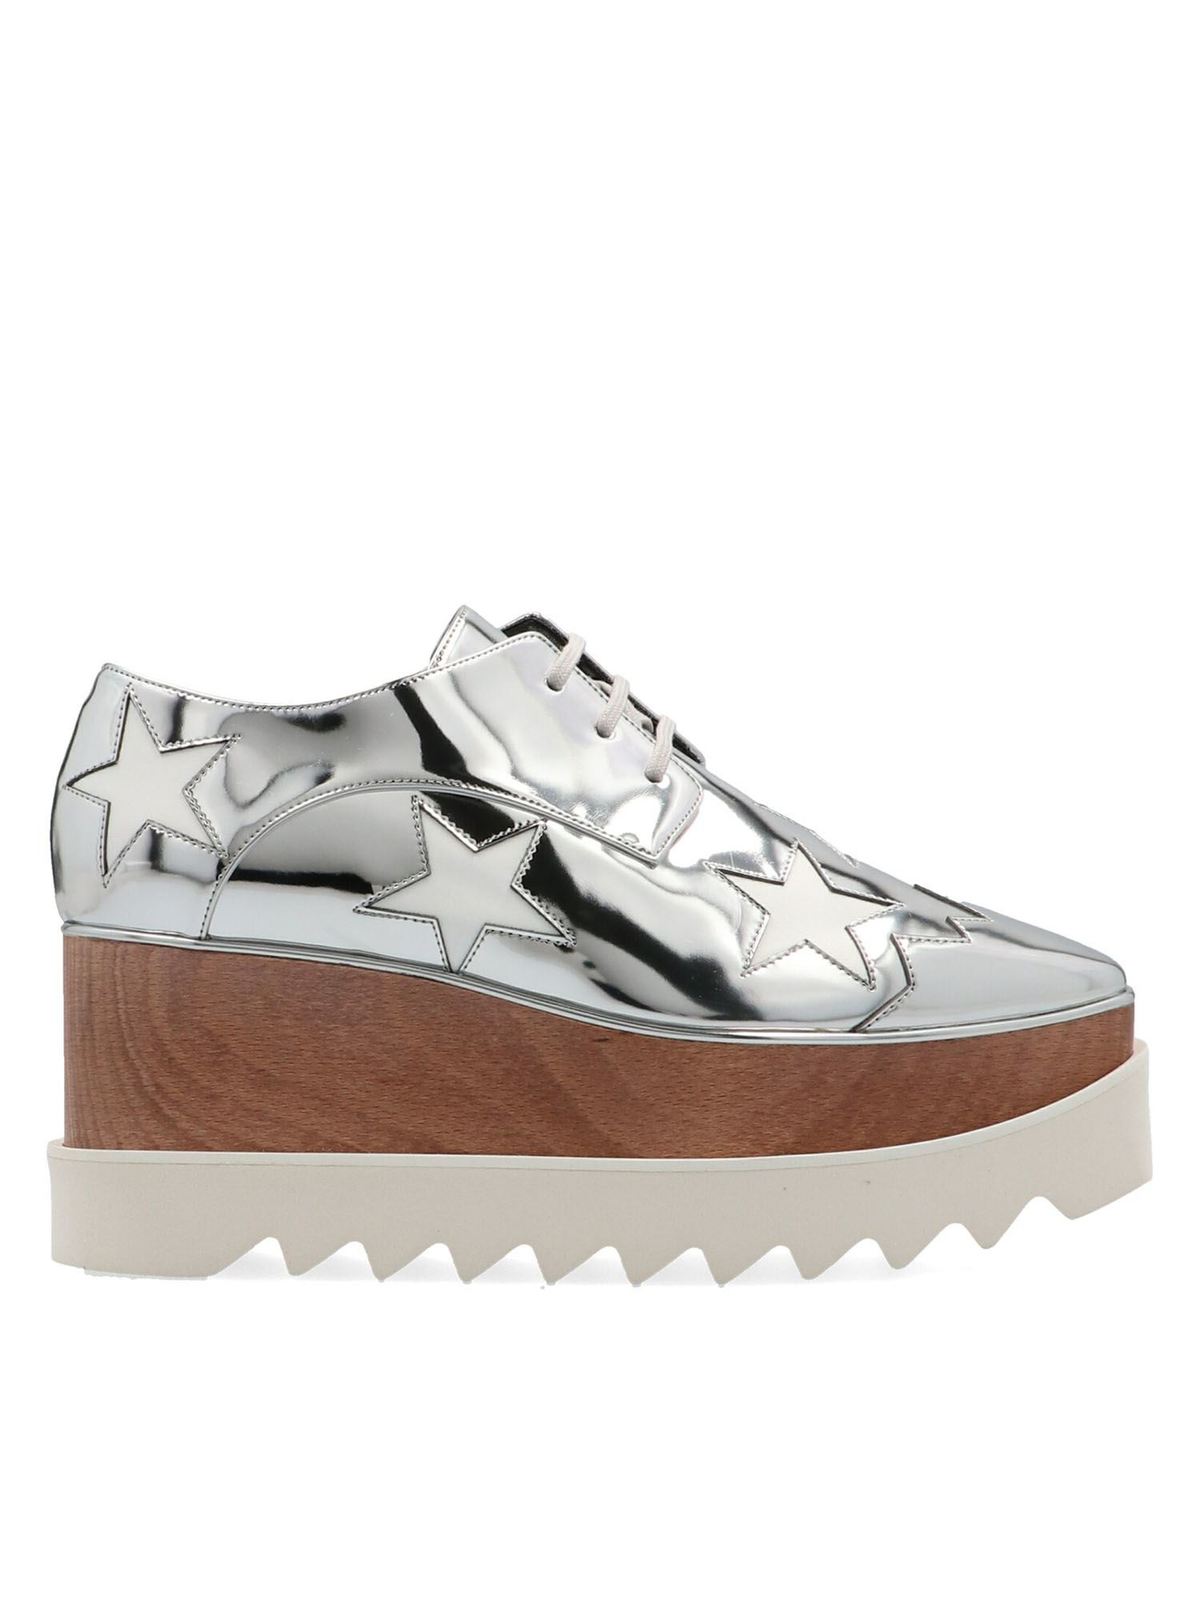 stella mccartney silver shoes